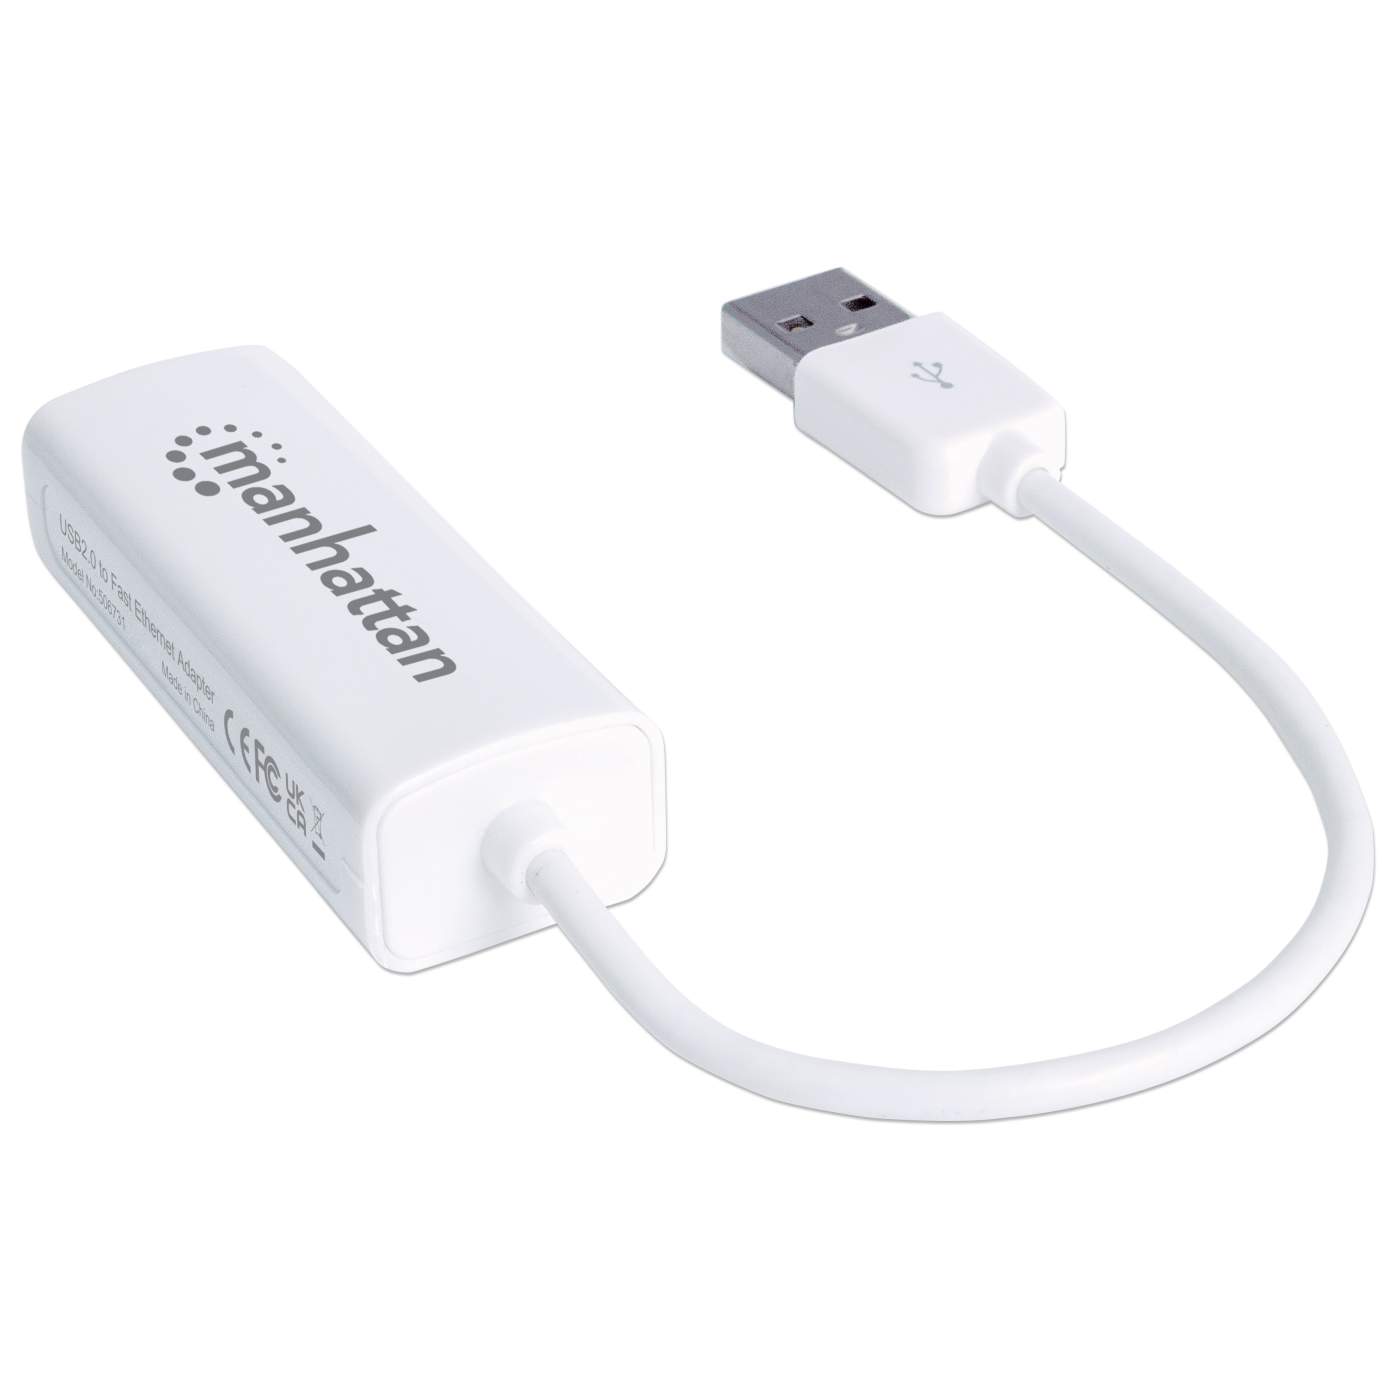 USB 2.0 Fast Ethernet Adapter Image 6